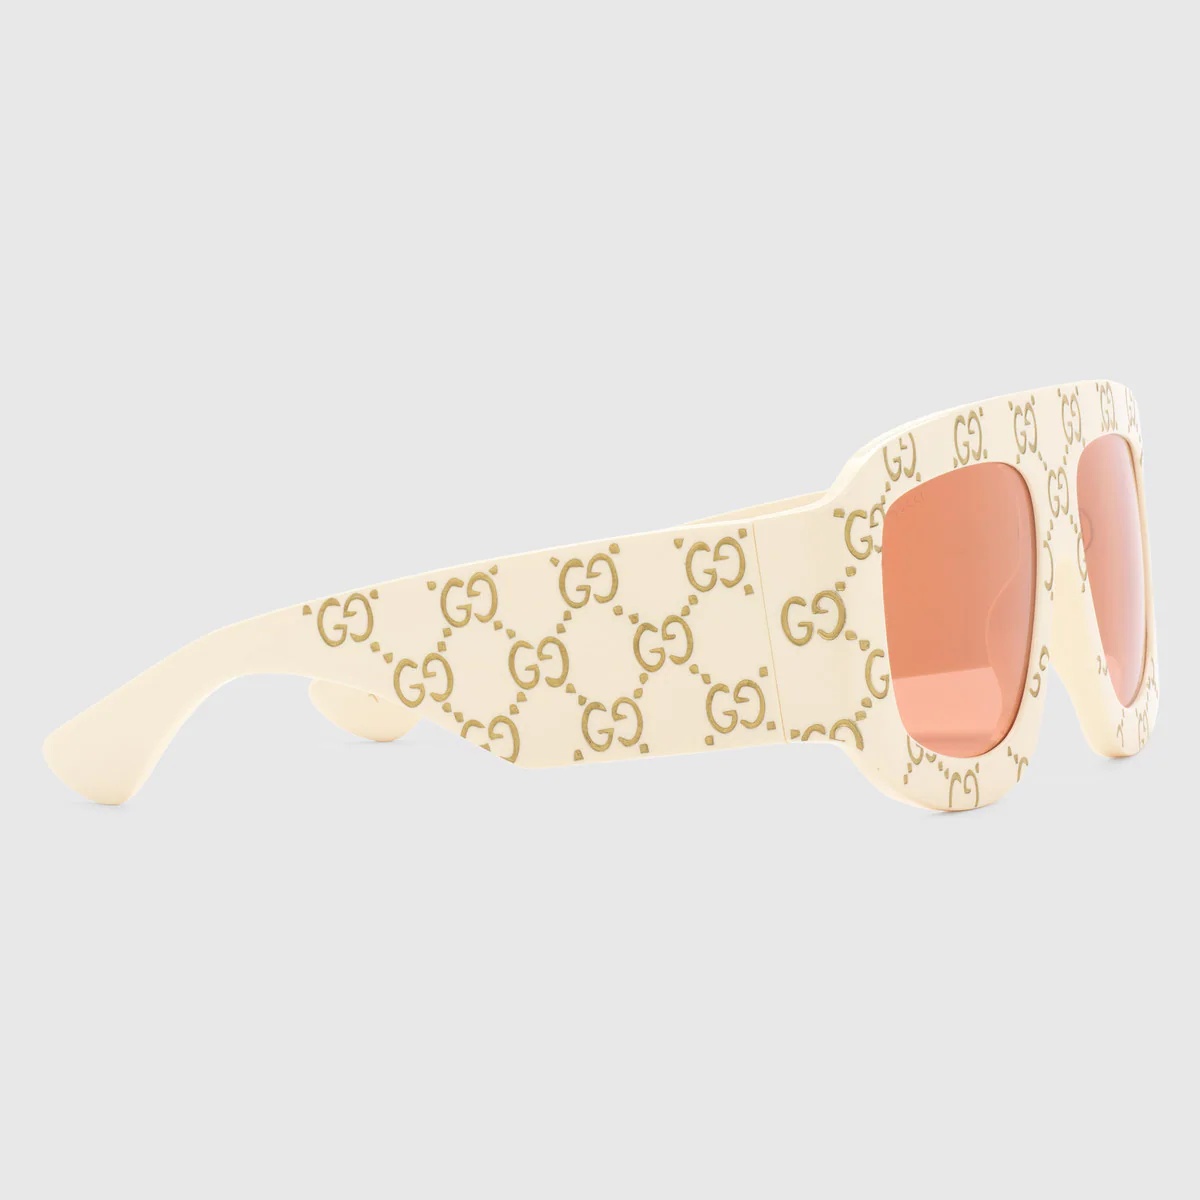 Oversize rectangular sunglasses - 2